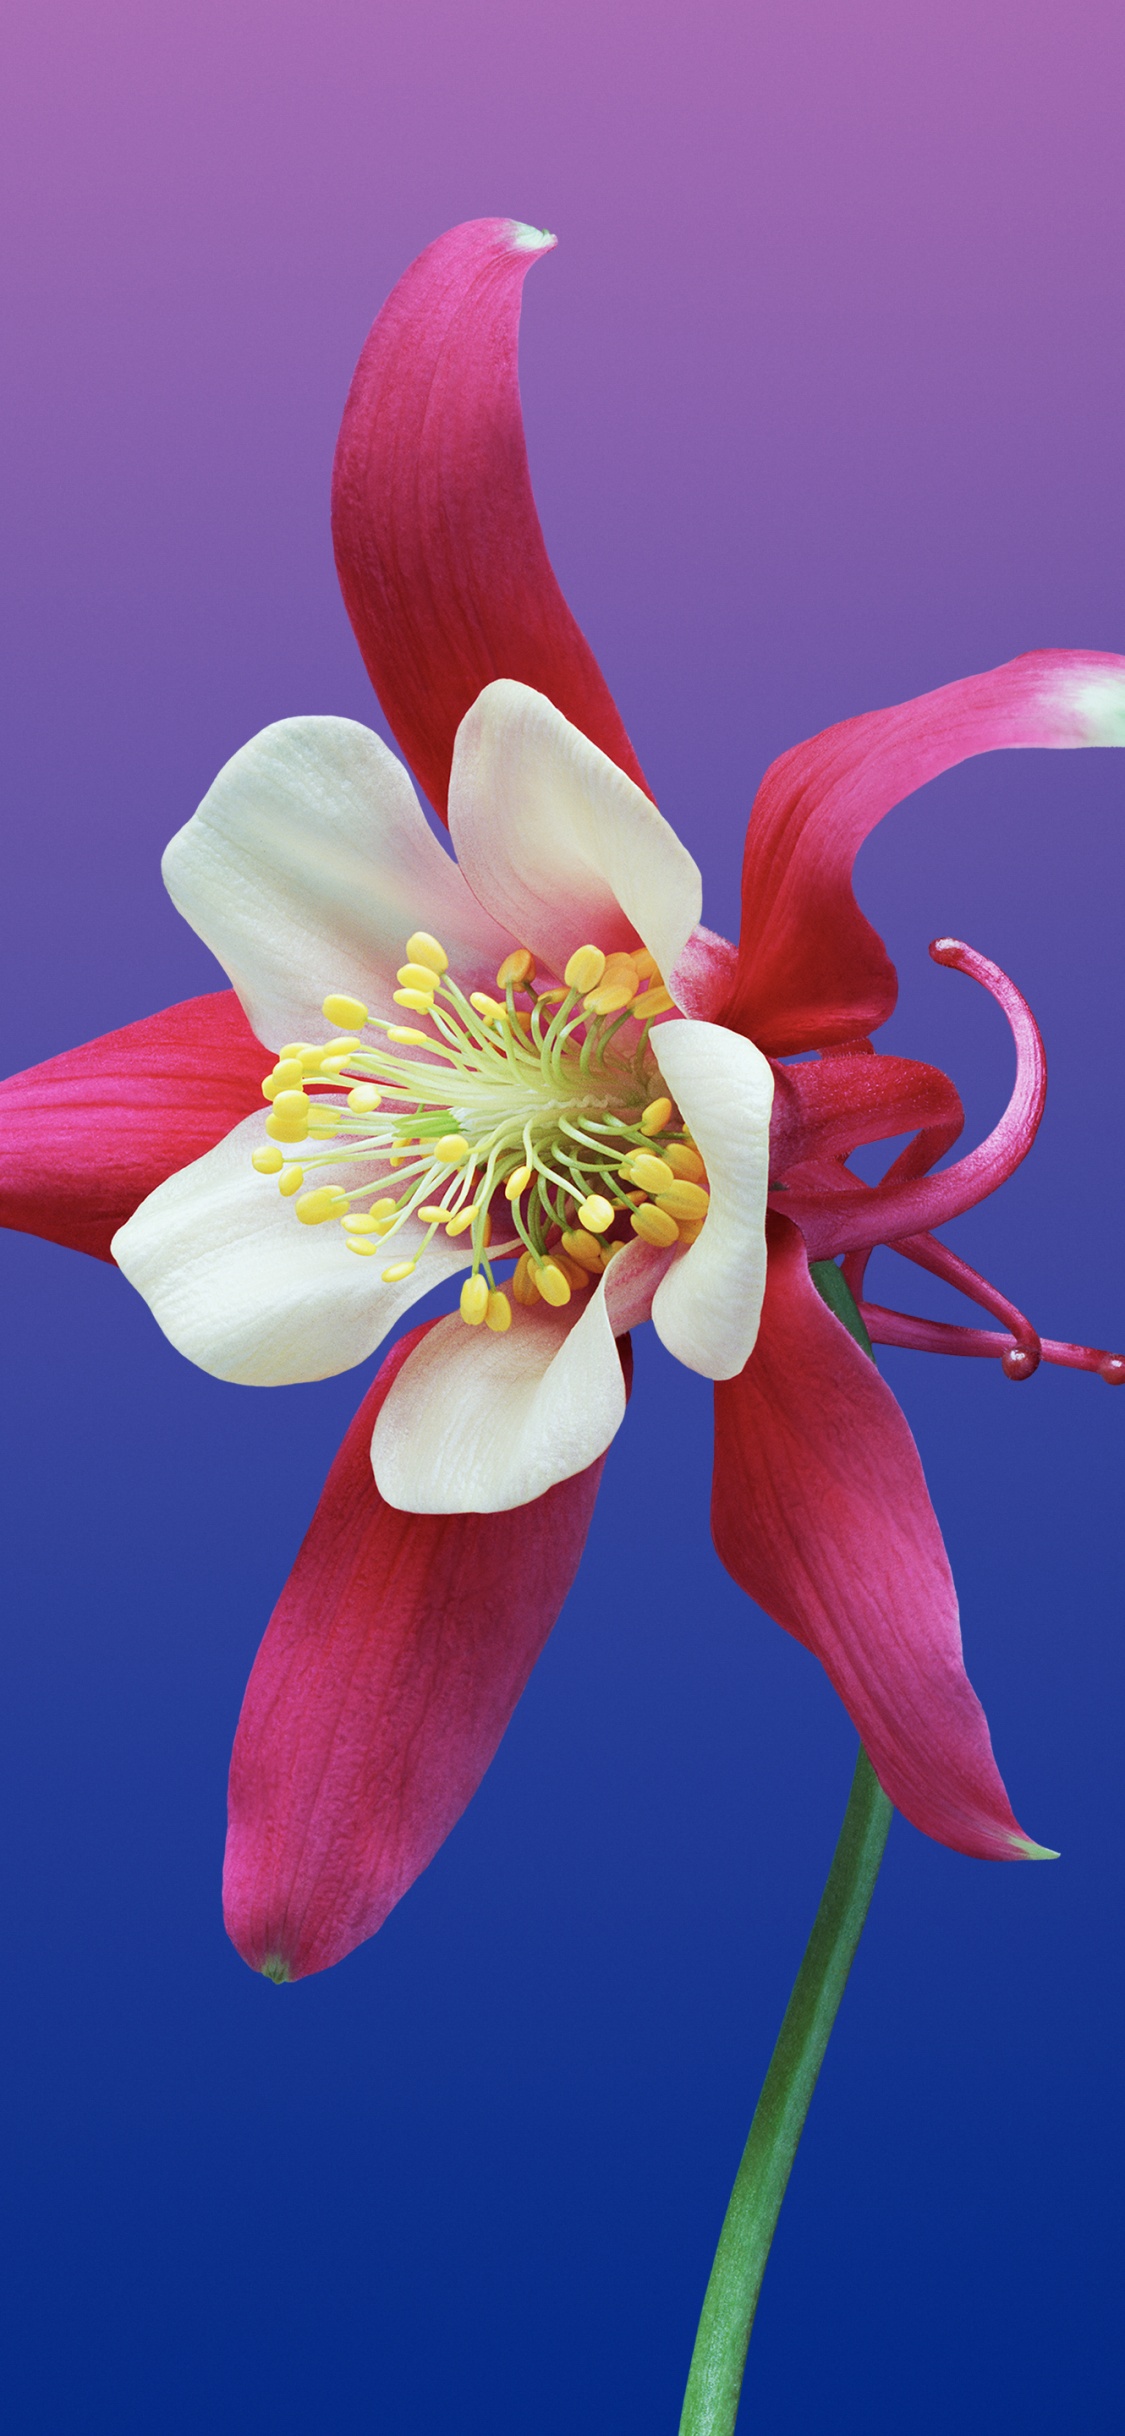 Aquilegia flower Wallpaper 4K, Gradient background, macOS Mojave, iOS